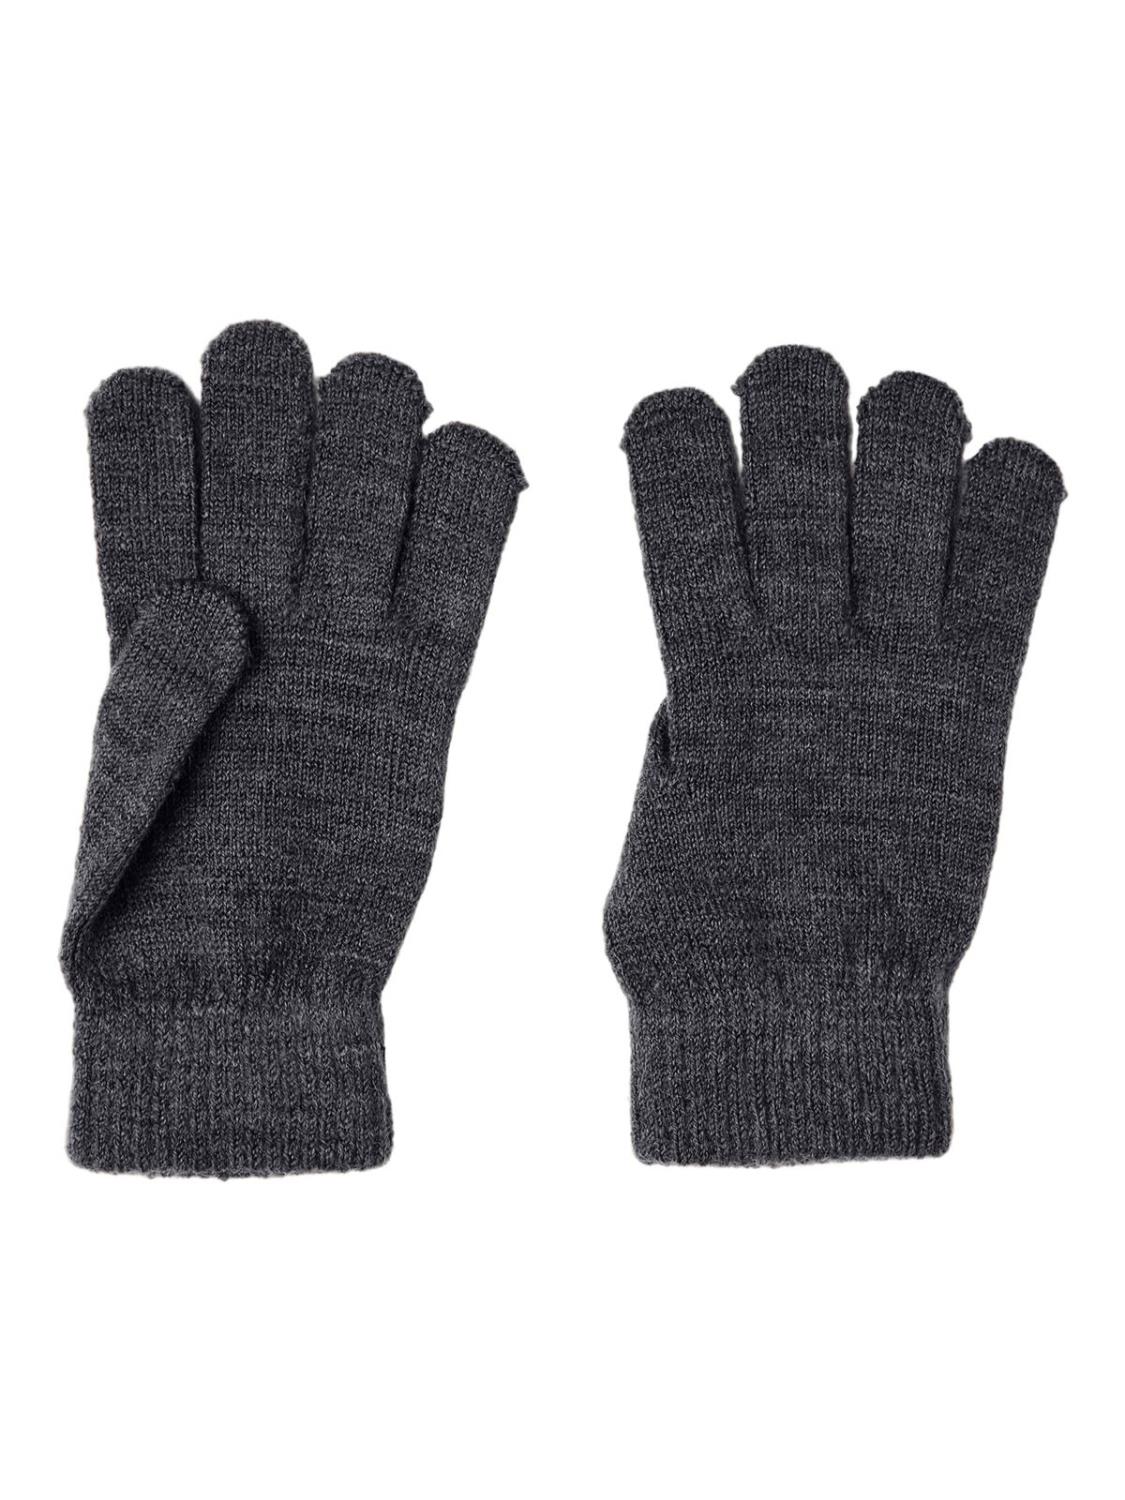 Wholla Wool Gloves - Blue Graphite